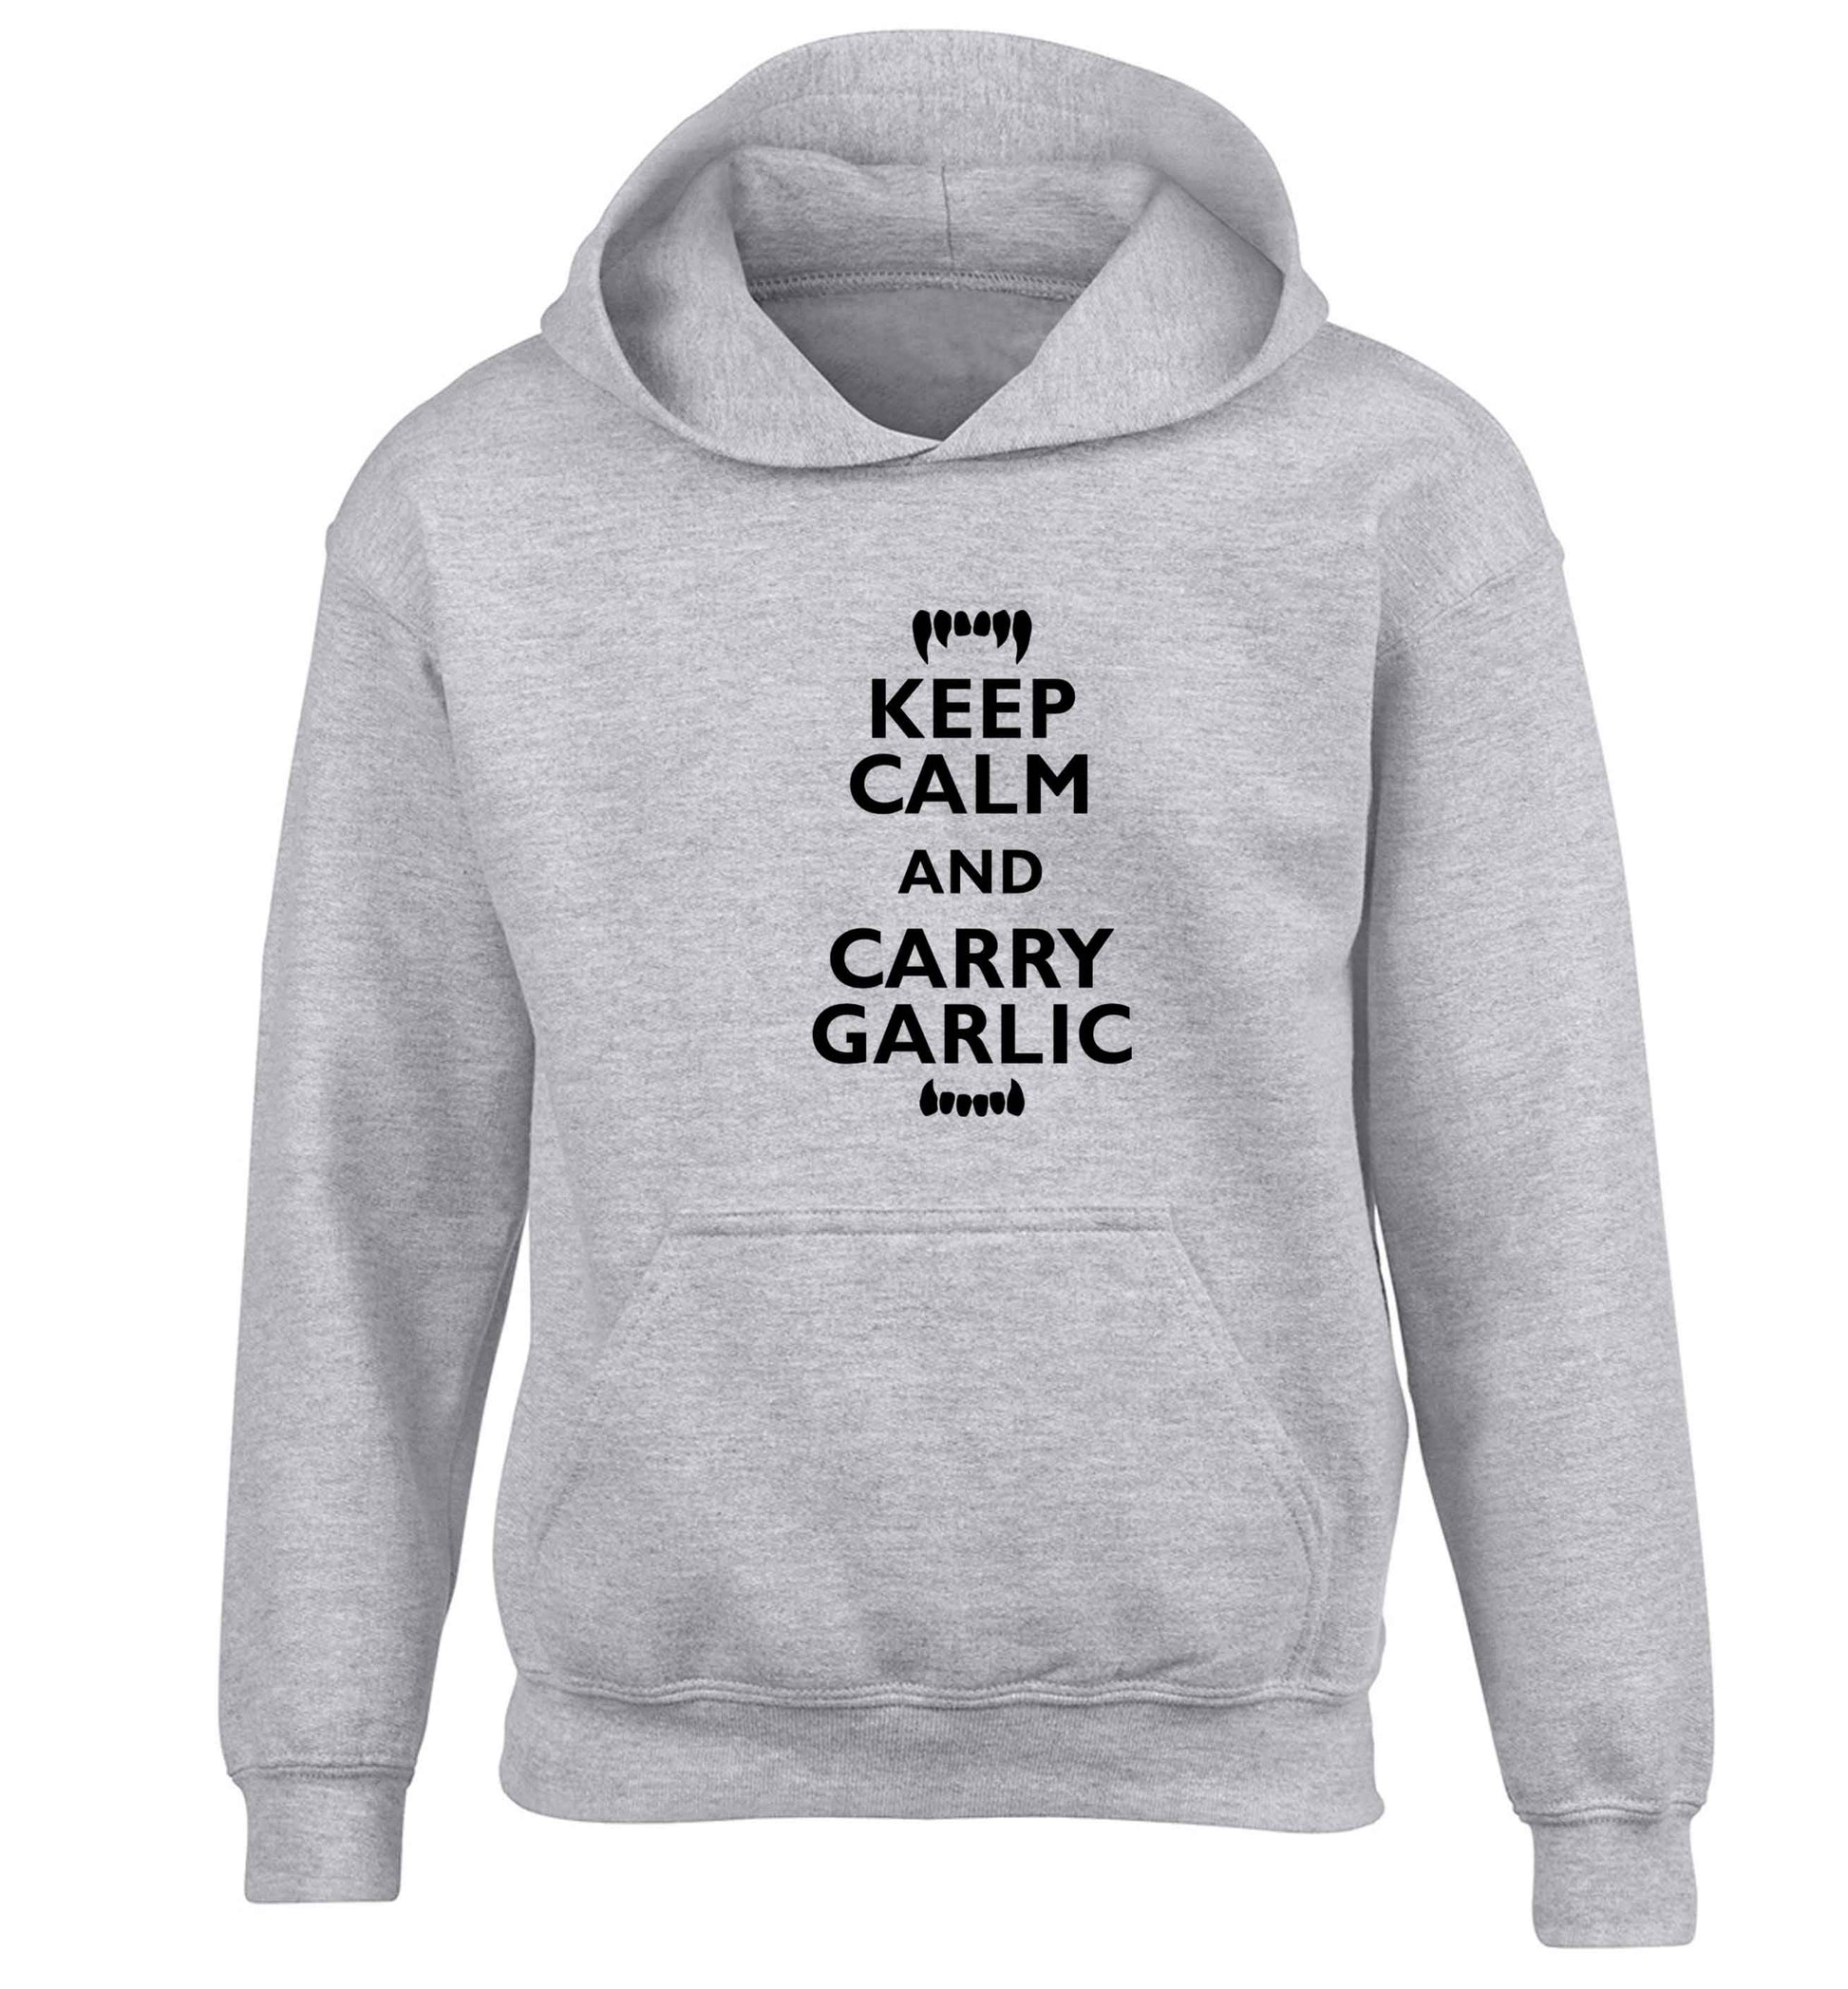 Keep calm and carry garlic children's grey hoodie 12-13 Years